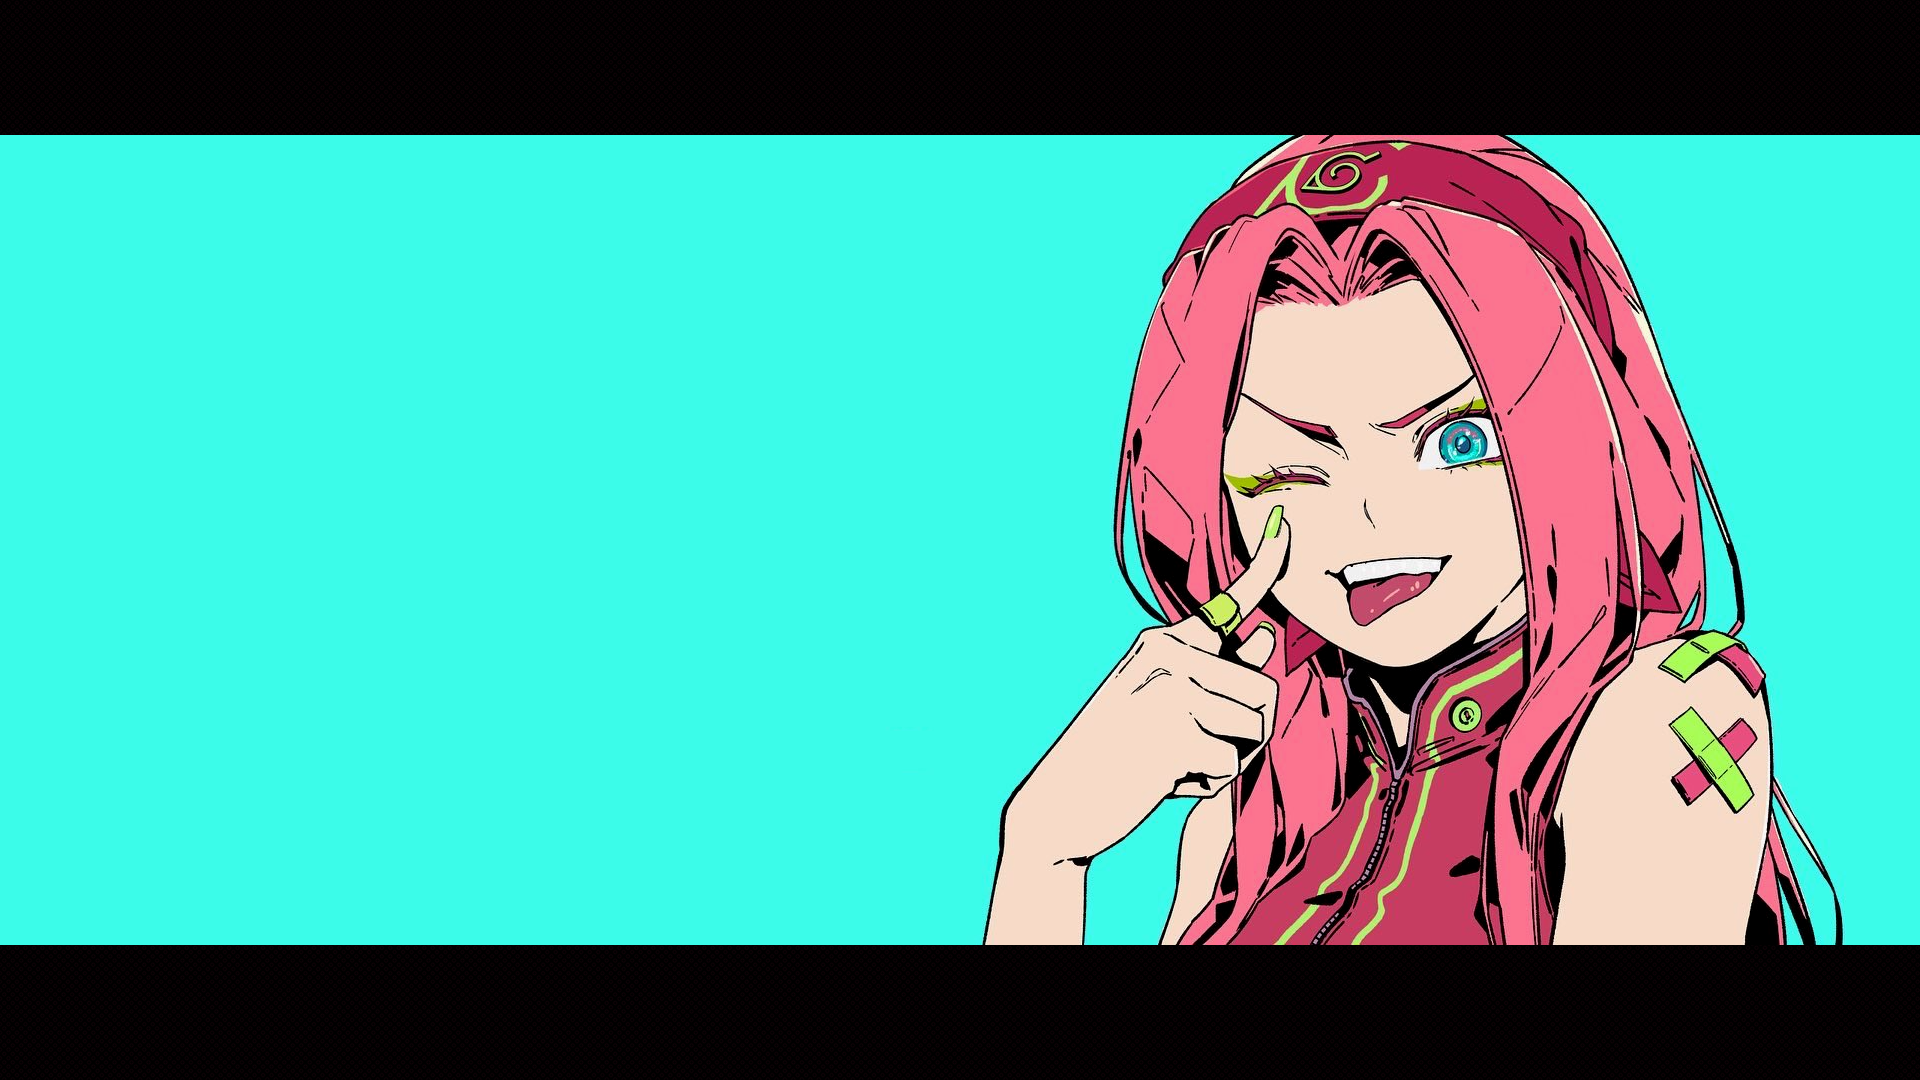 Anime Girls Anime Haruno Sakura Blue Eyes Pink Hair Headband Teal Background Tongue Out Wink Teeth F 1920x1080